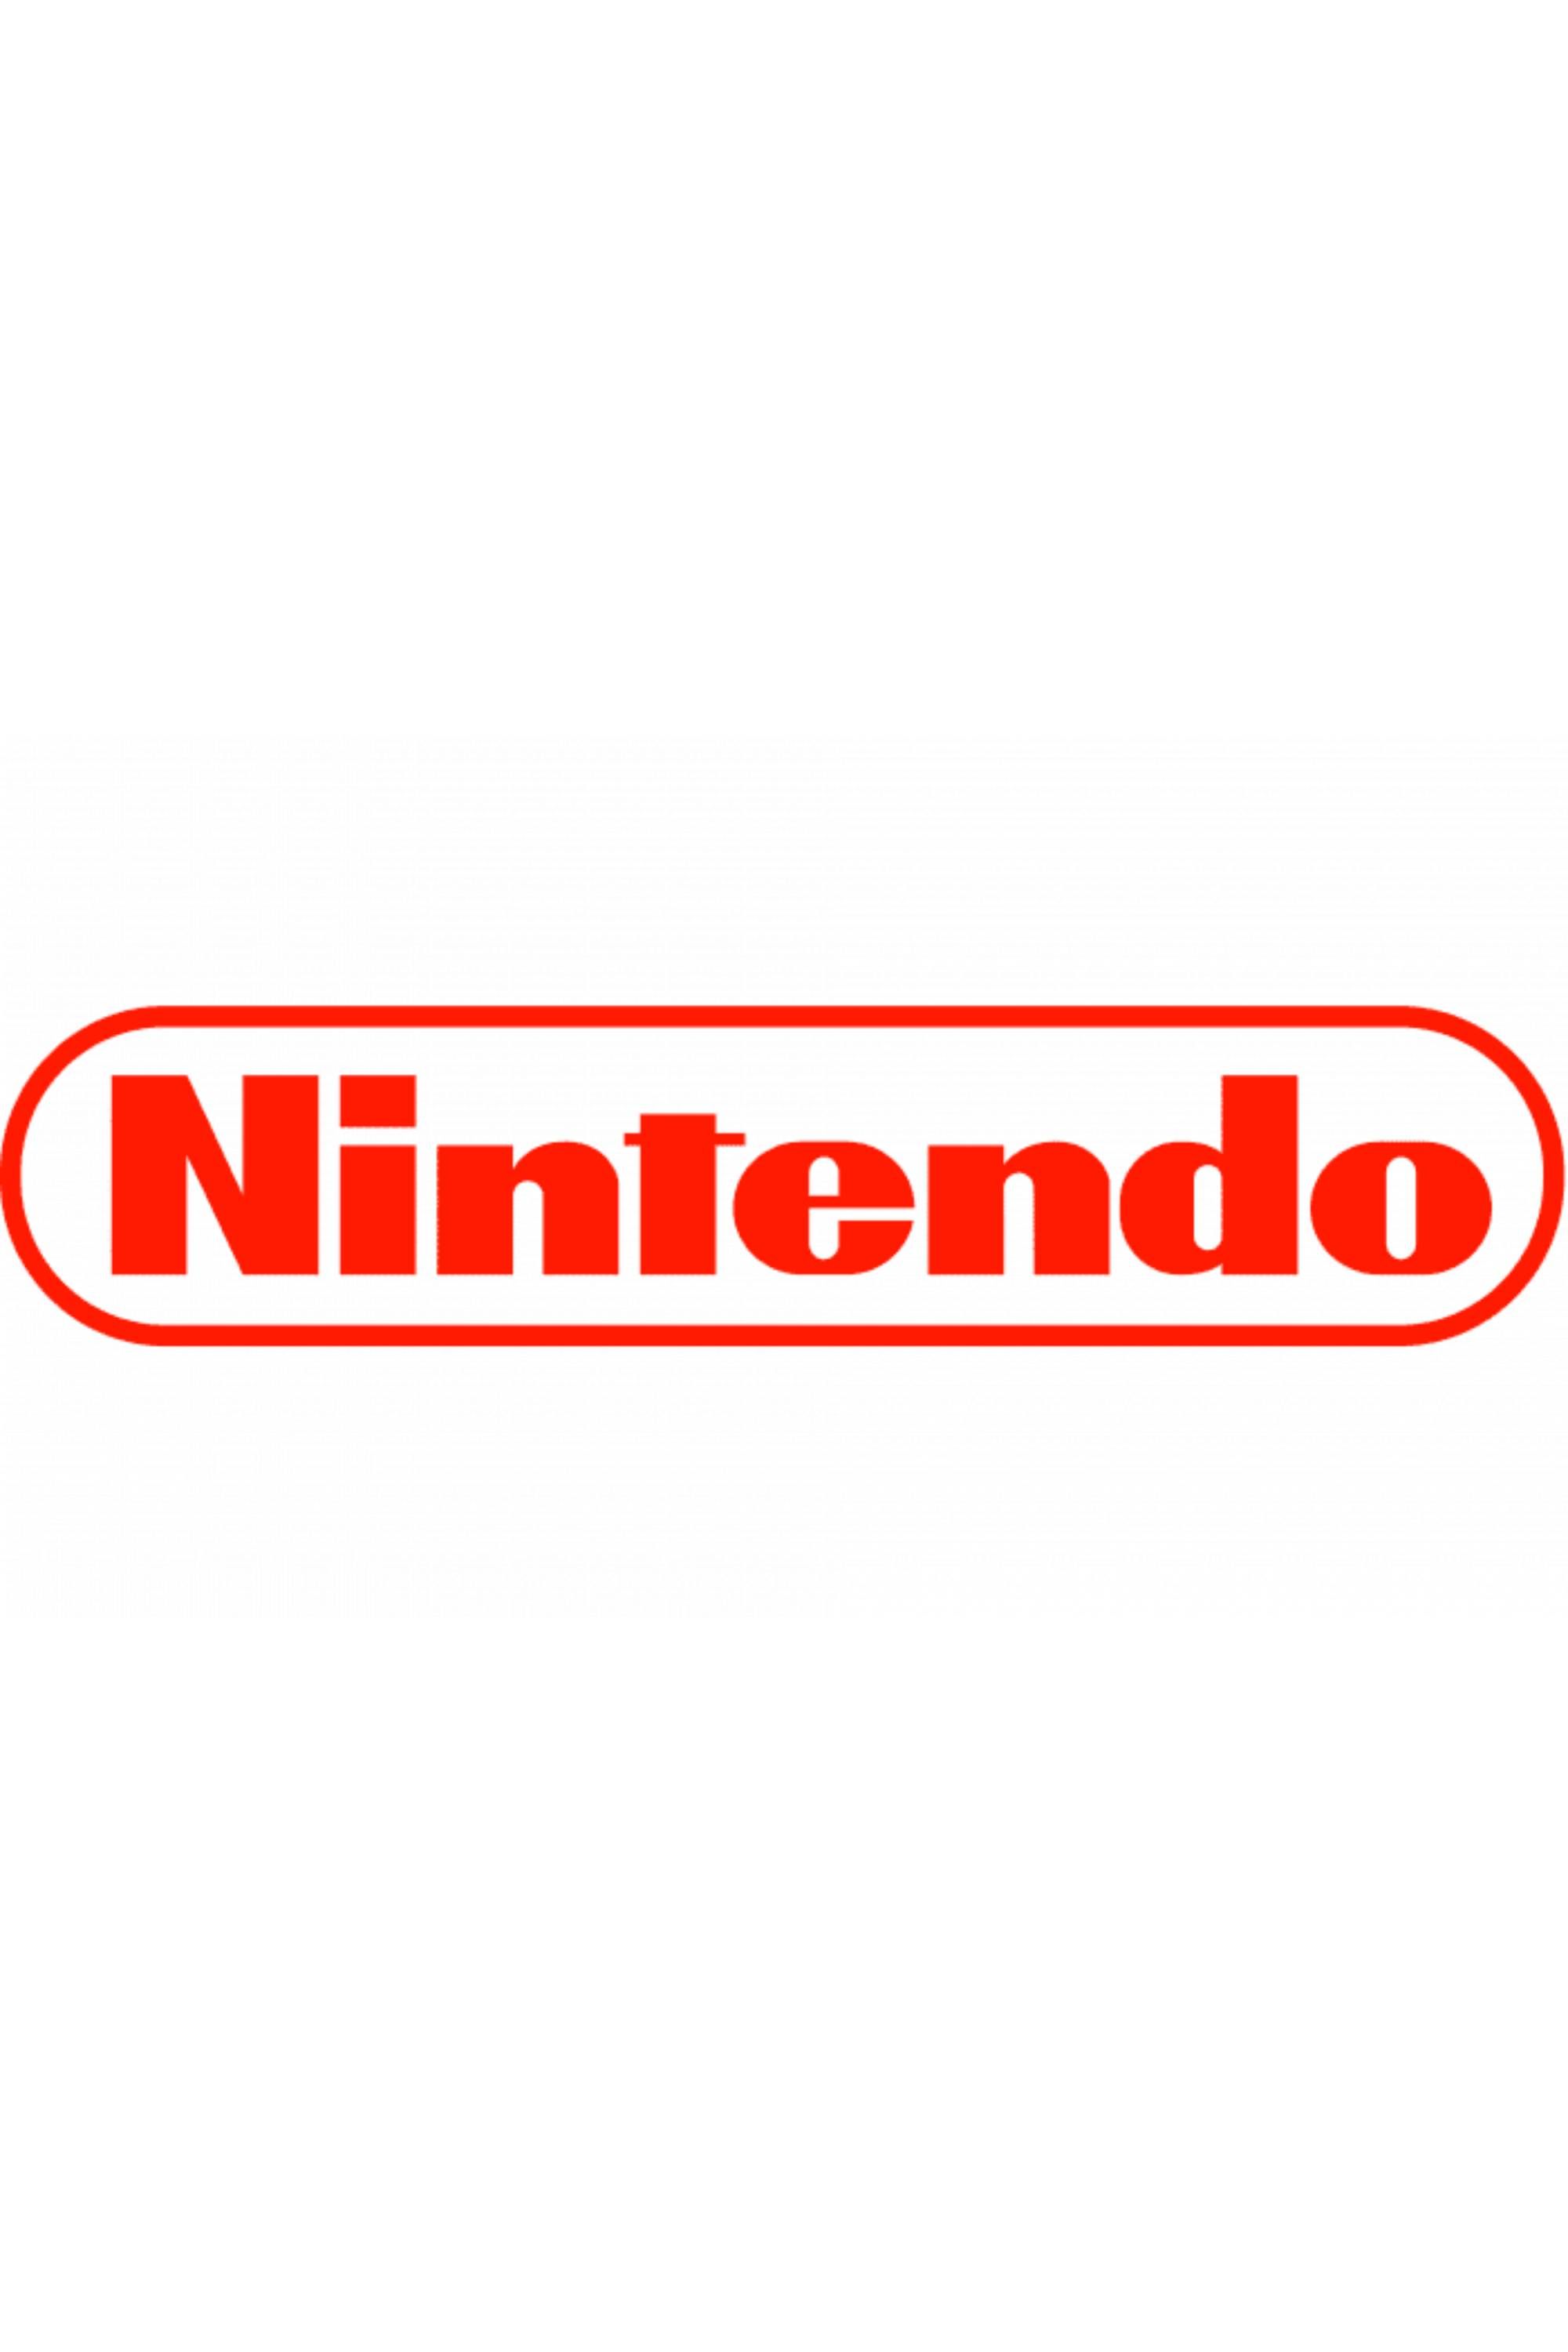 Nintendo Patent Could Trace at Massive Change UI Adjustments